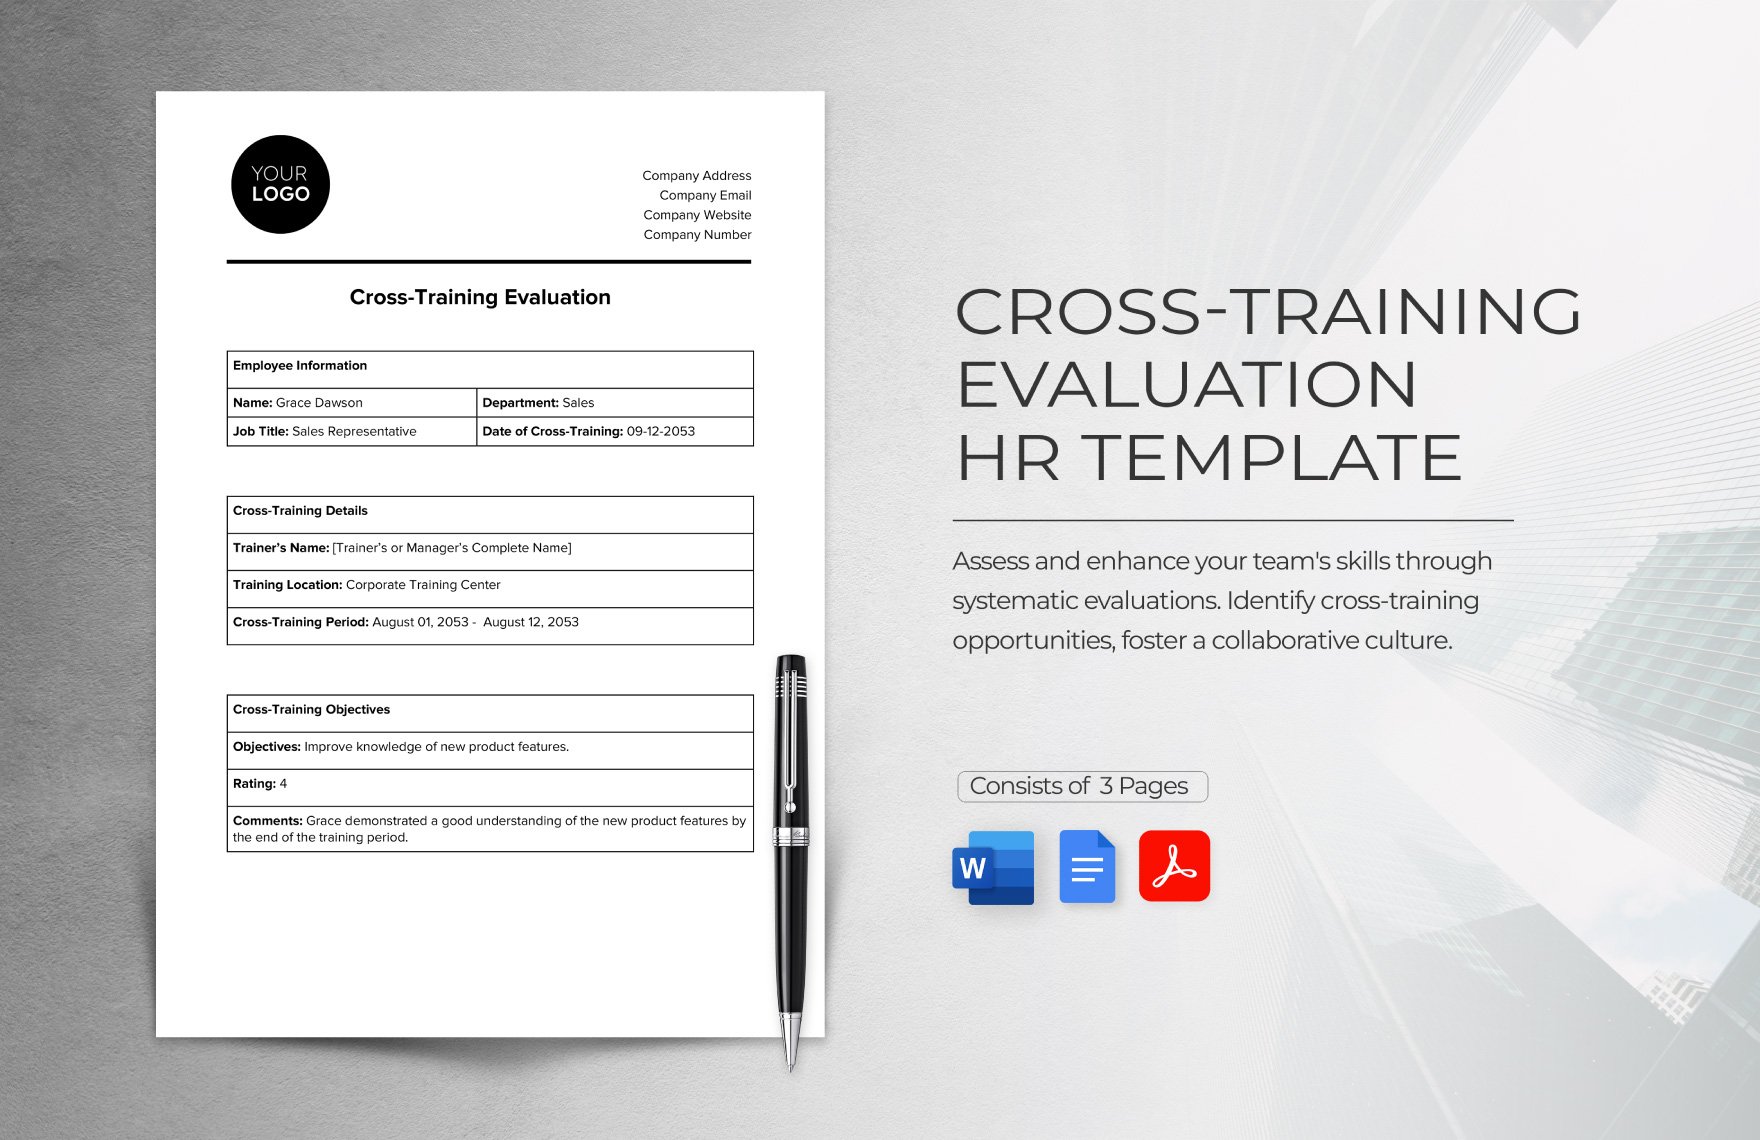 Cross-training Evaluation HR Template